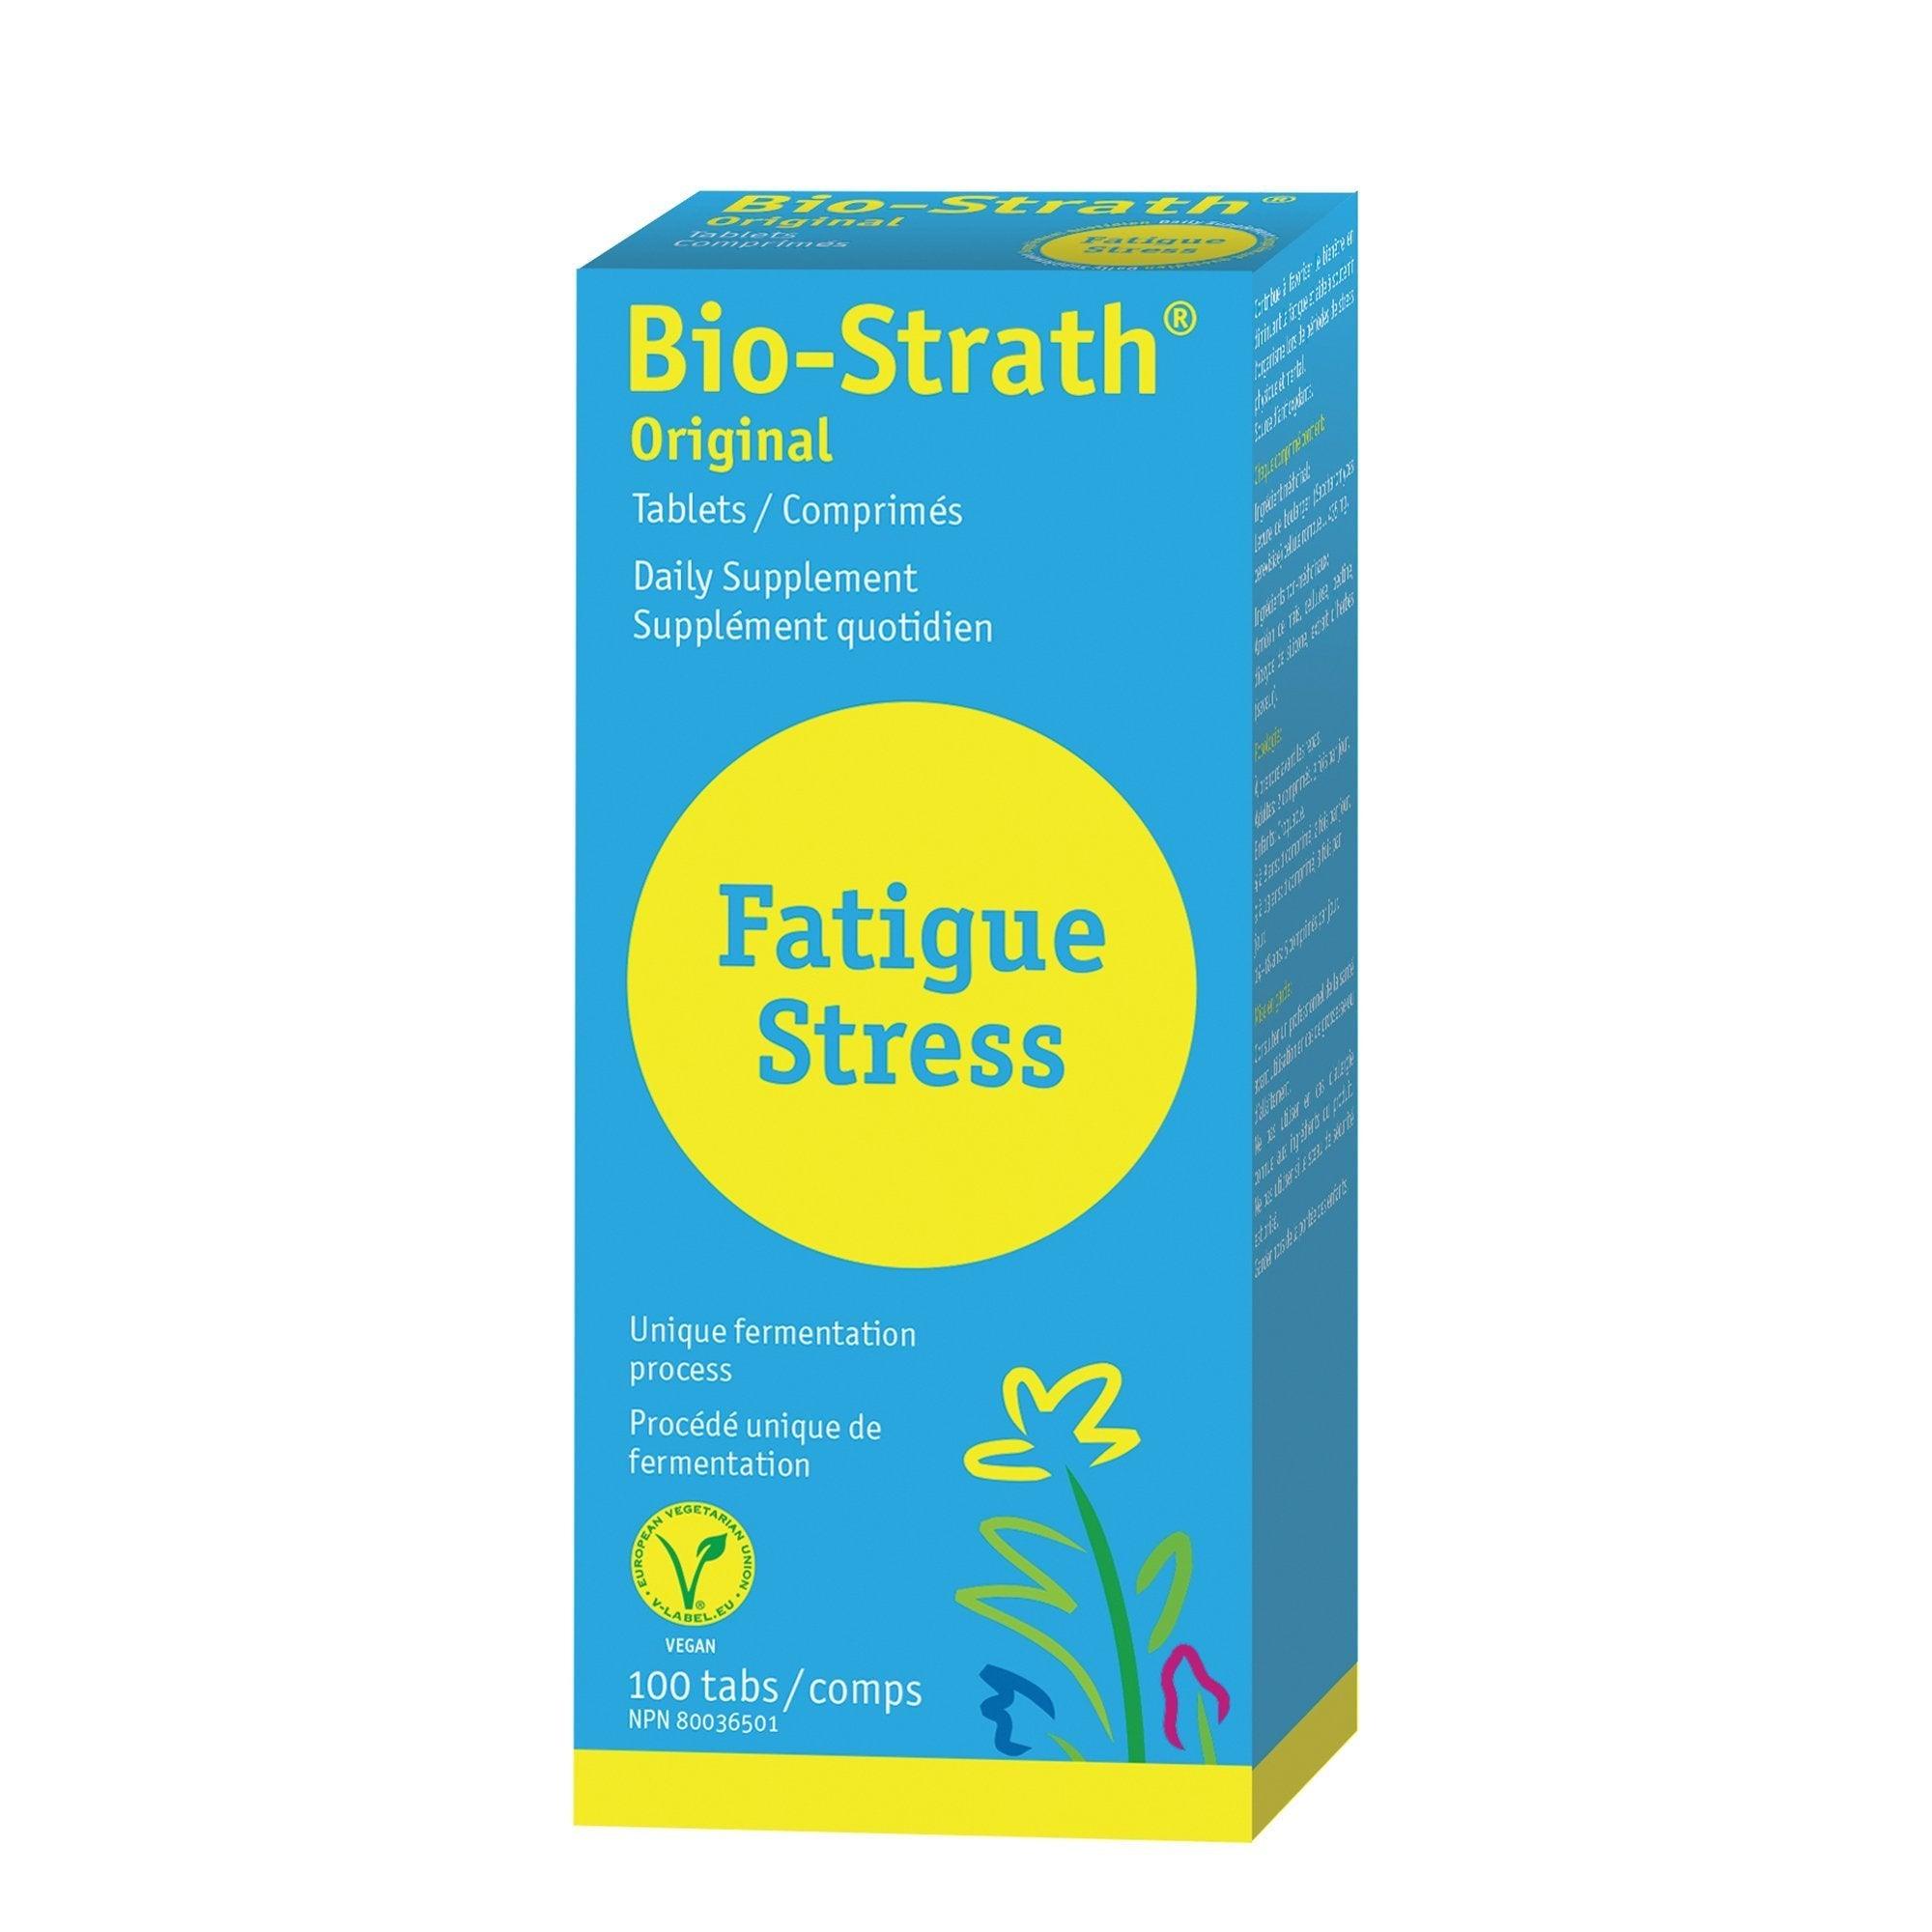 Bio-Strath Original Fatigue Stress, 100 Tabs